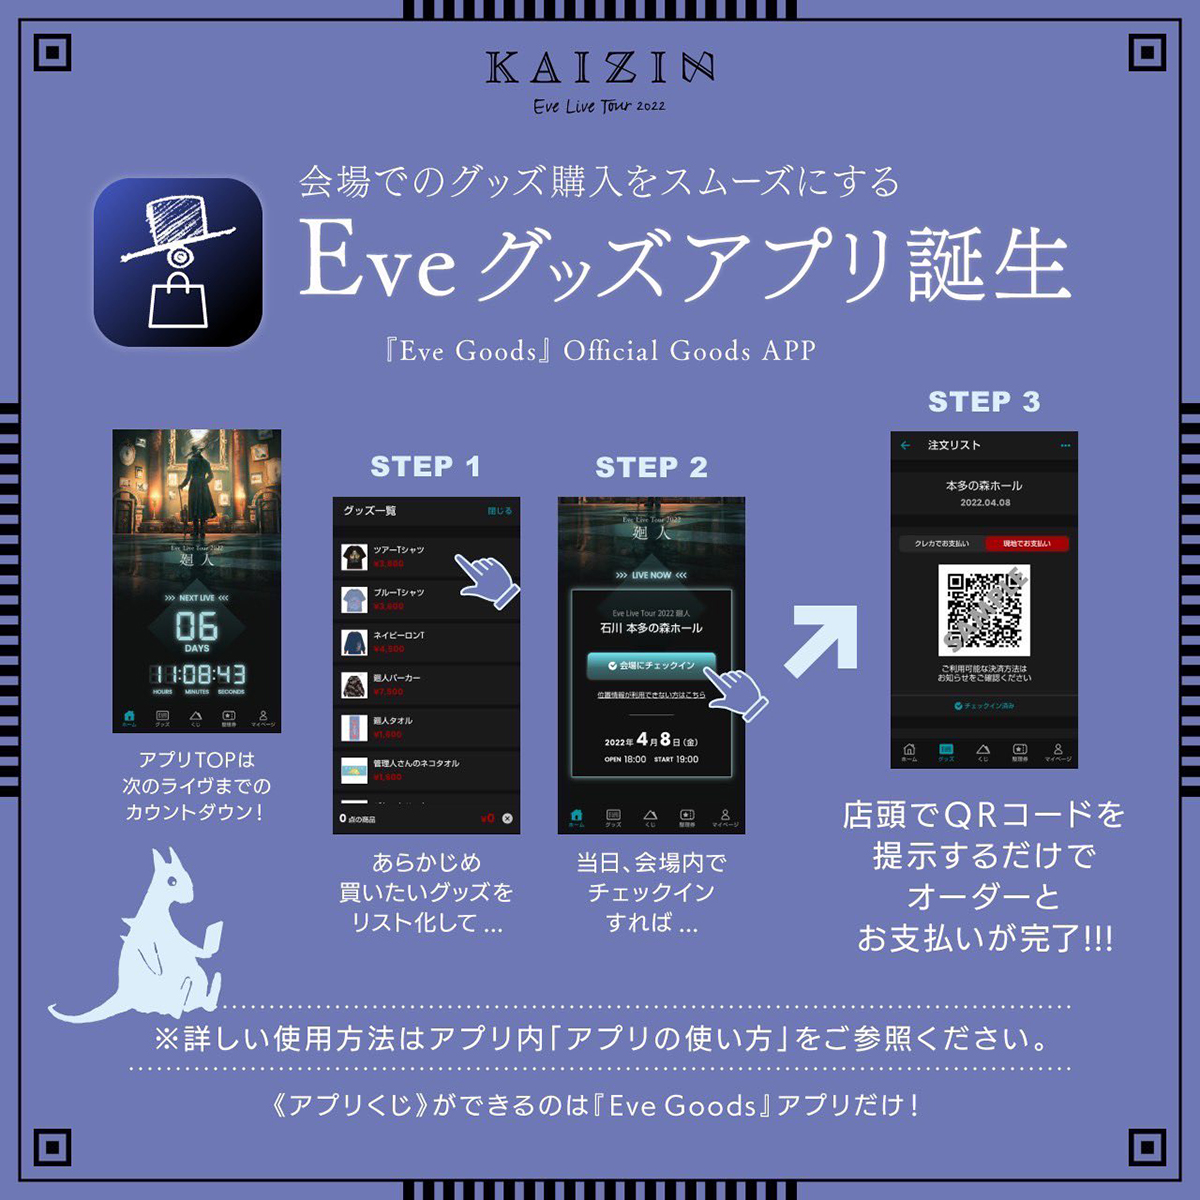 Eve Live Tour 2022 廻人 日本武道館 追加公演会場グッズ販売のご案内 